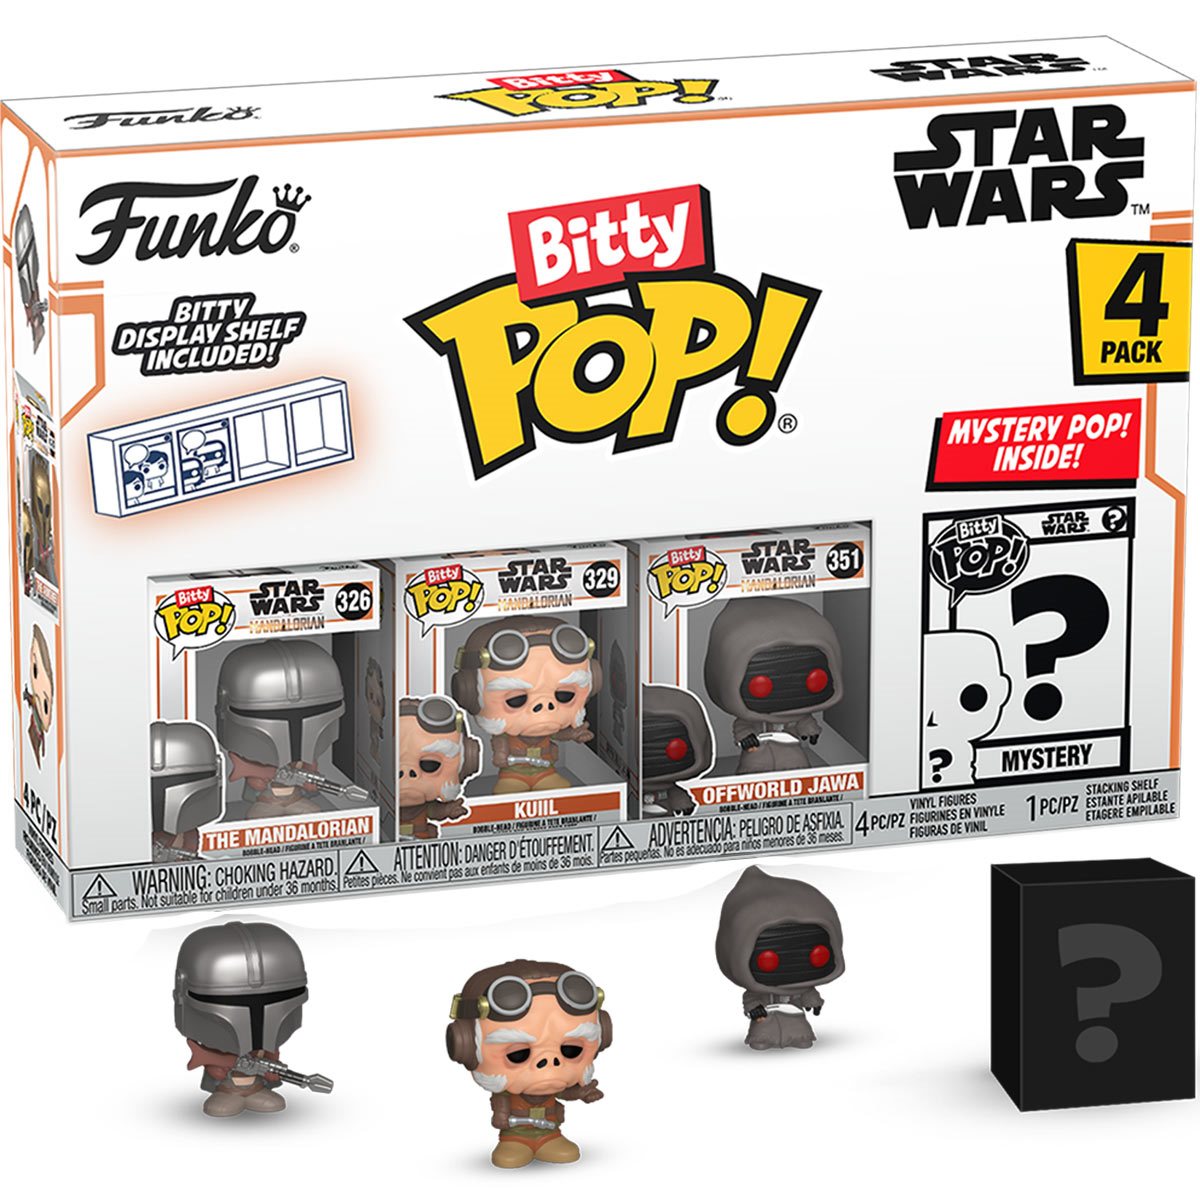 Buy Bitty Pop! Star Wars 4-Pack Series 2 at Funko.